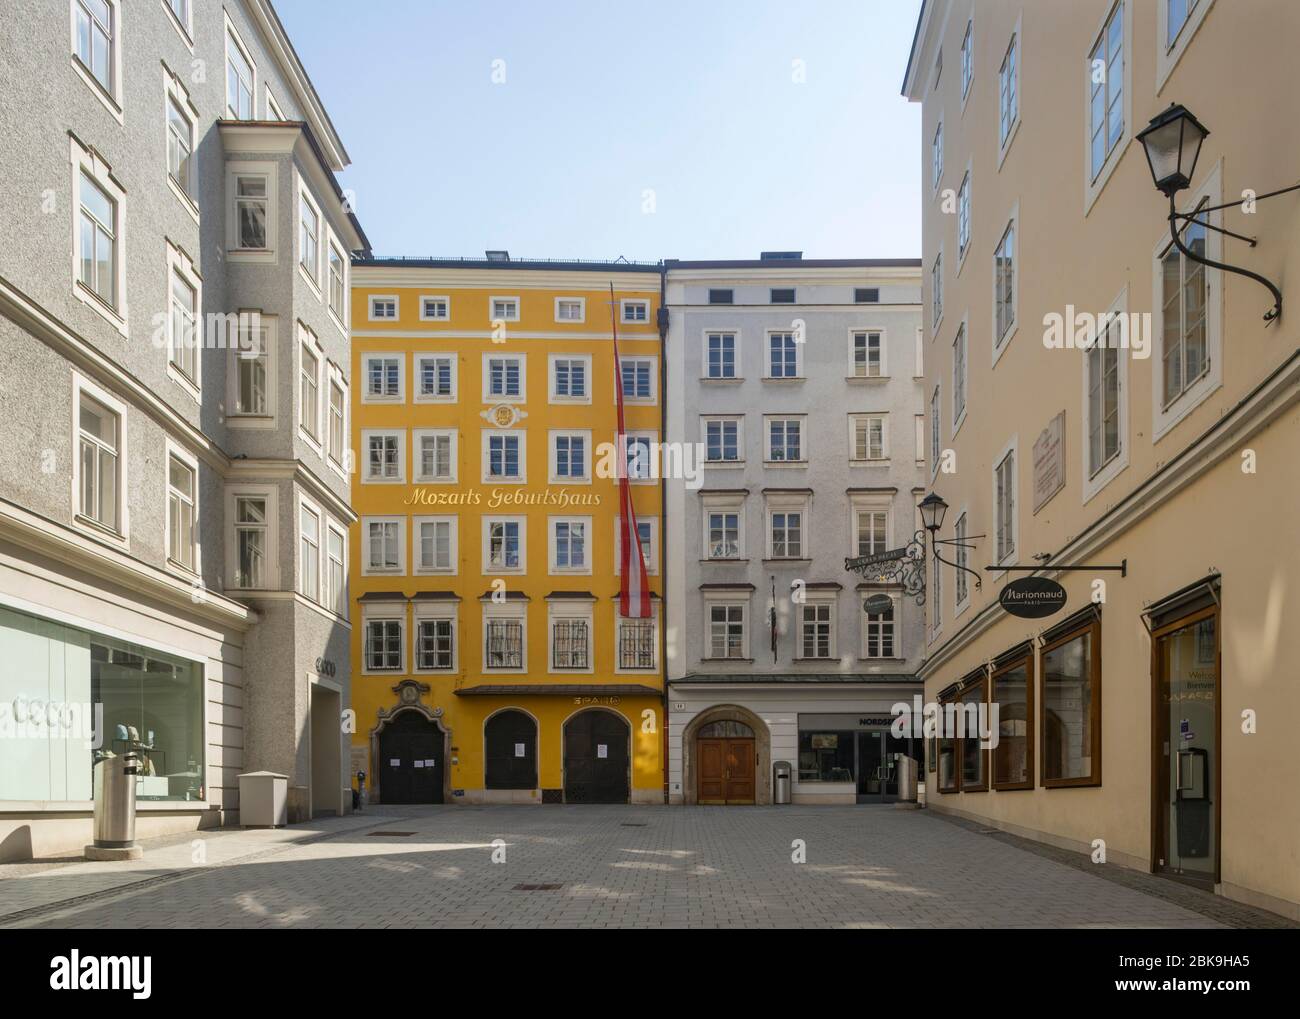 Vacant lots due to the coronavirus pandemic, Mozart's birthplace, Getreidegasse, Salzburg, Austria Stock Photo